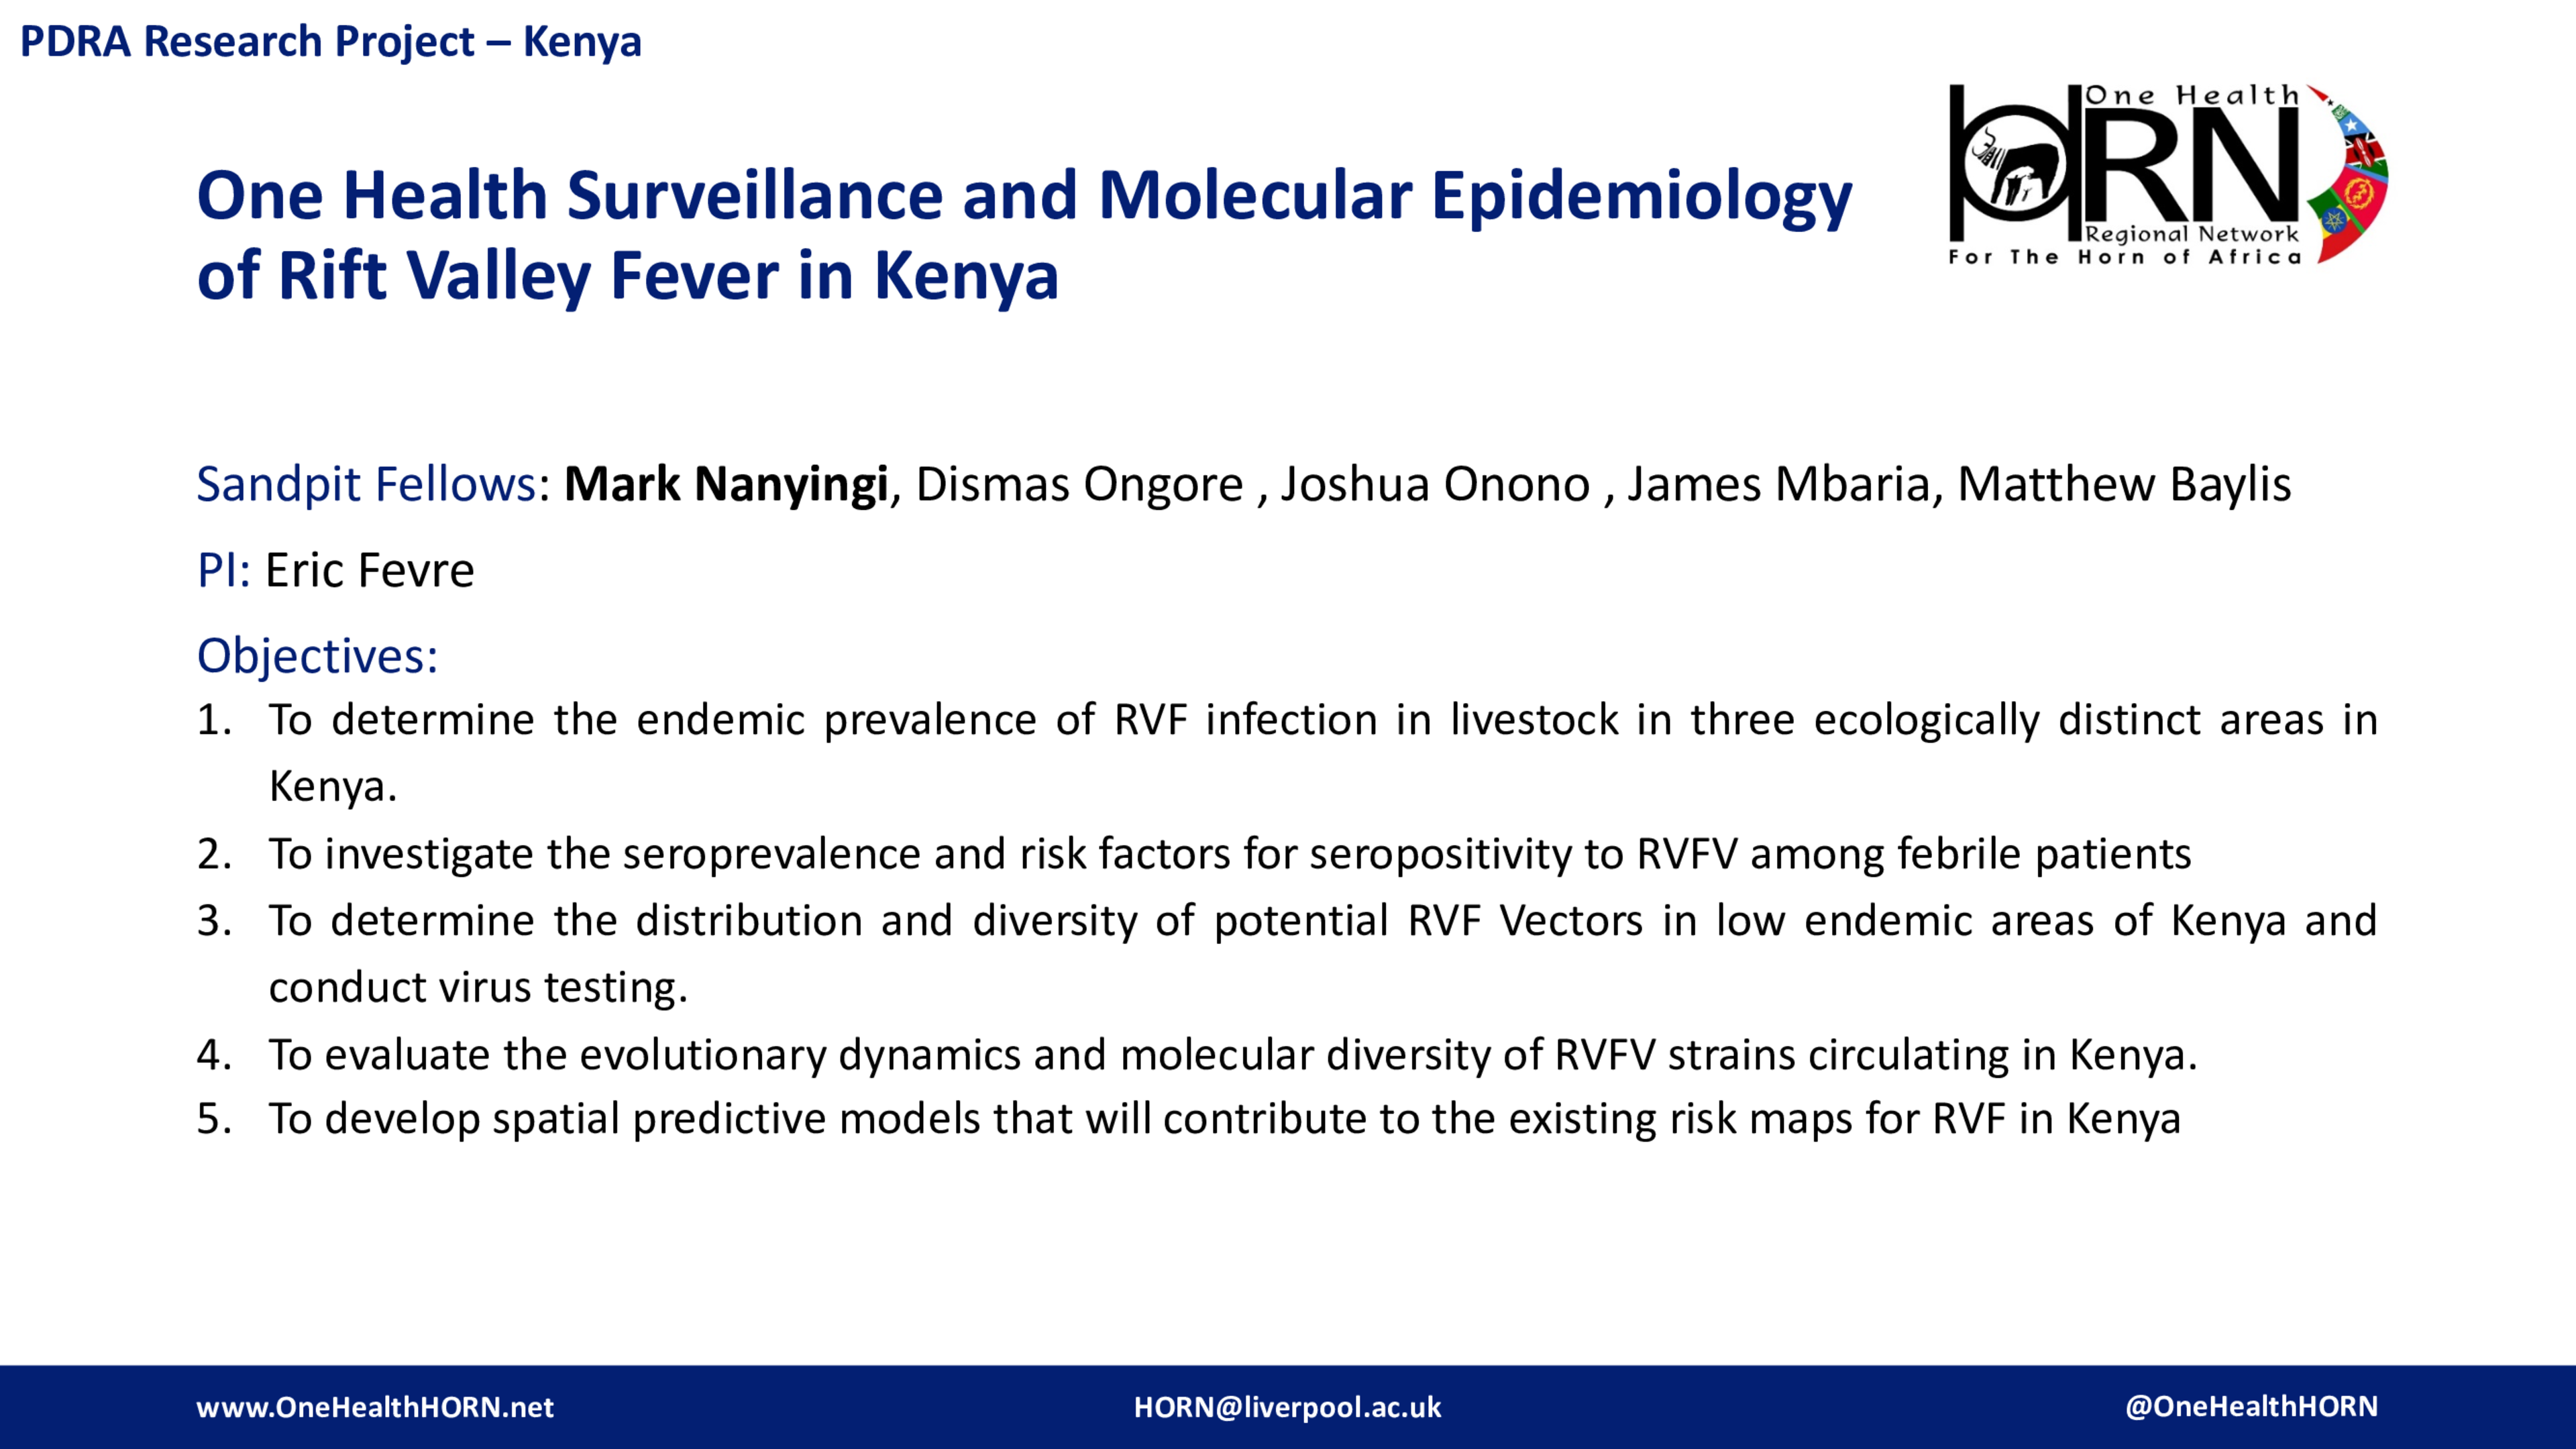 One Health Surveillance and Molecular Epidemiology of Rift Valley Fever in Kenya